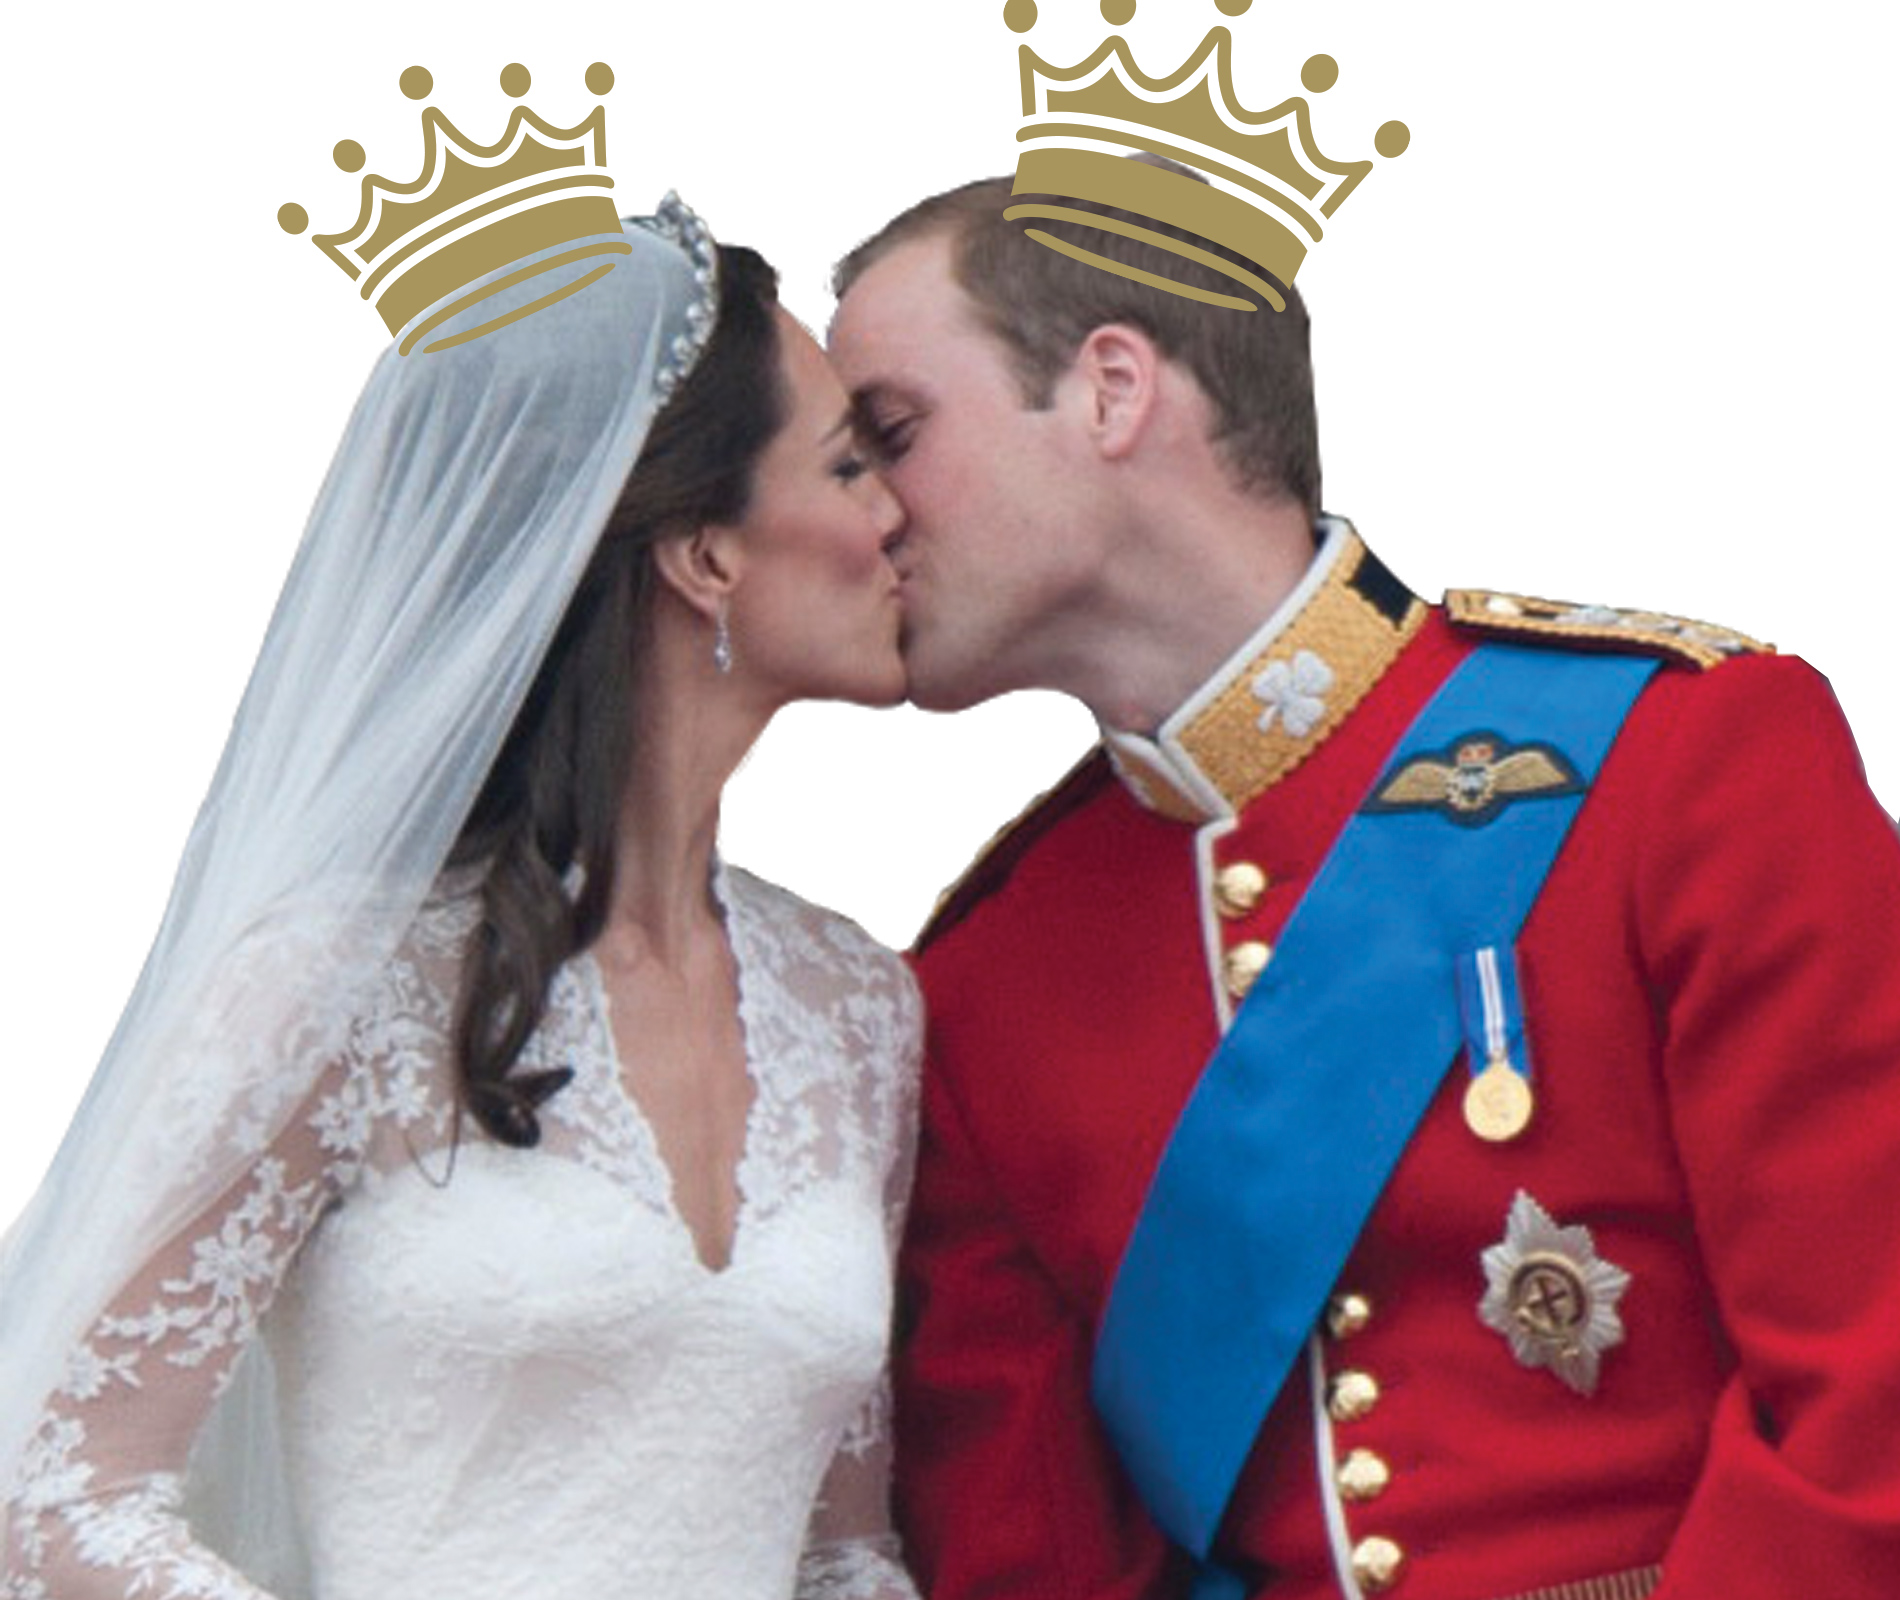 Survey reveals how much Kiwis love the royals